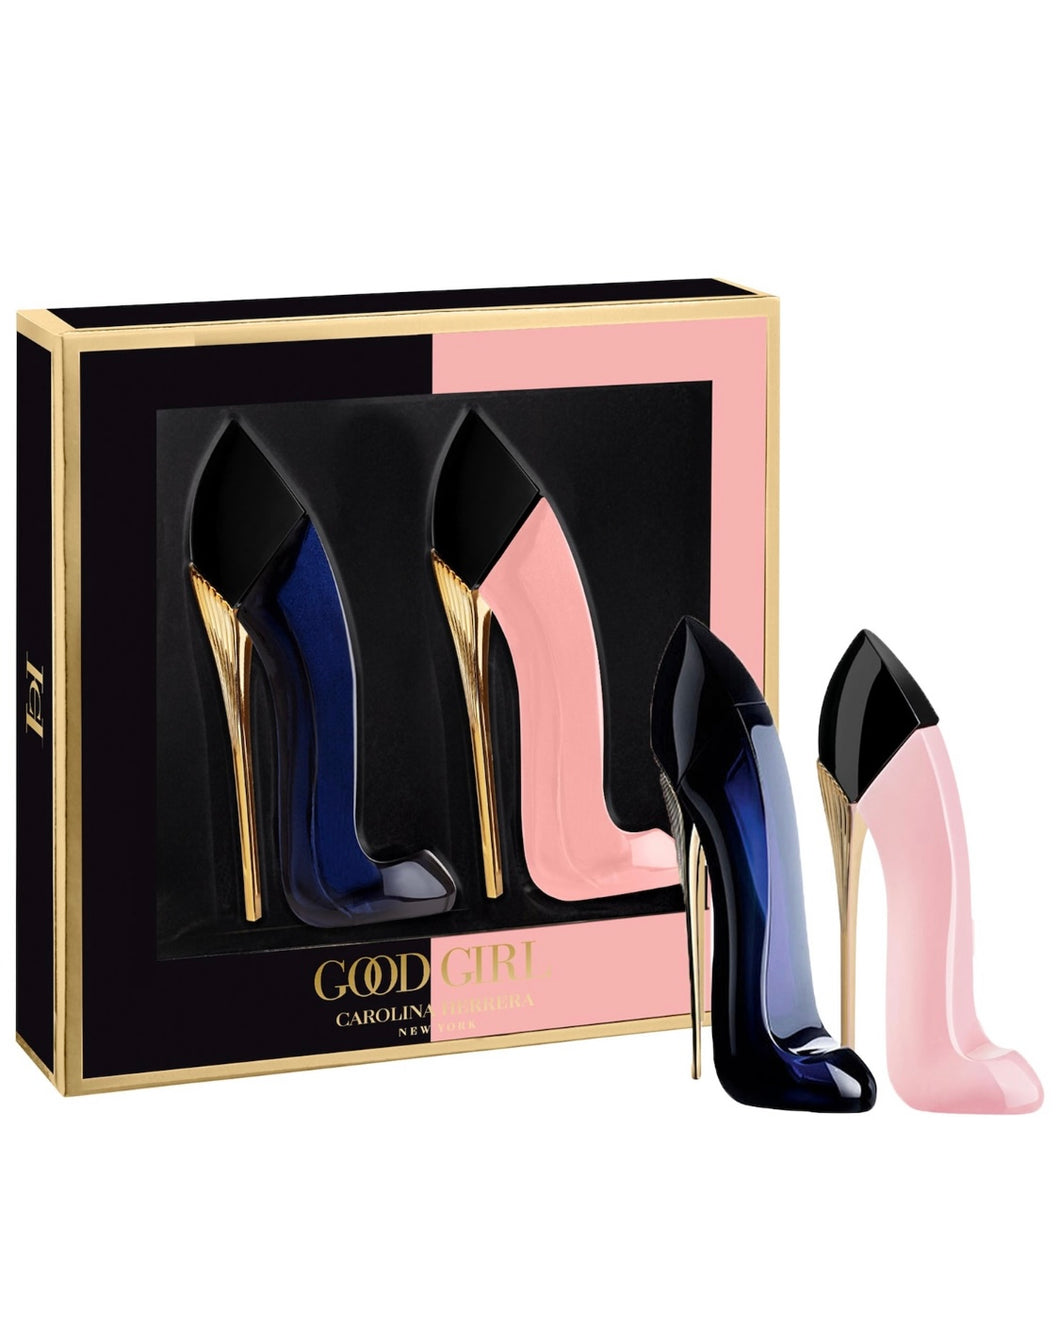 “Mini Good Girl & Good Girl Blush Perfume Set” Carolina Herrera